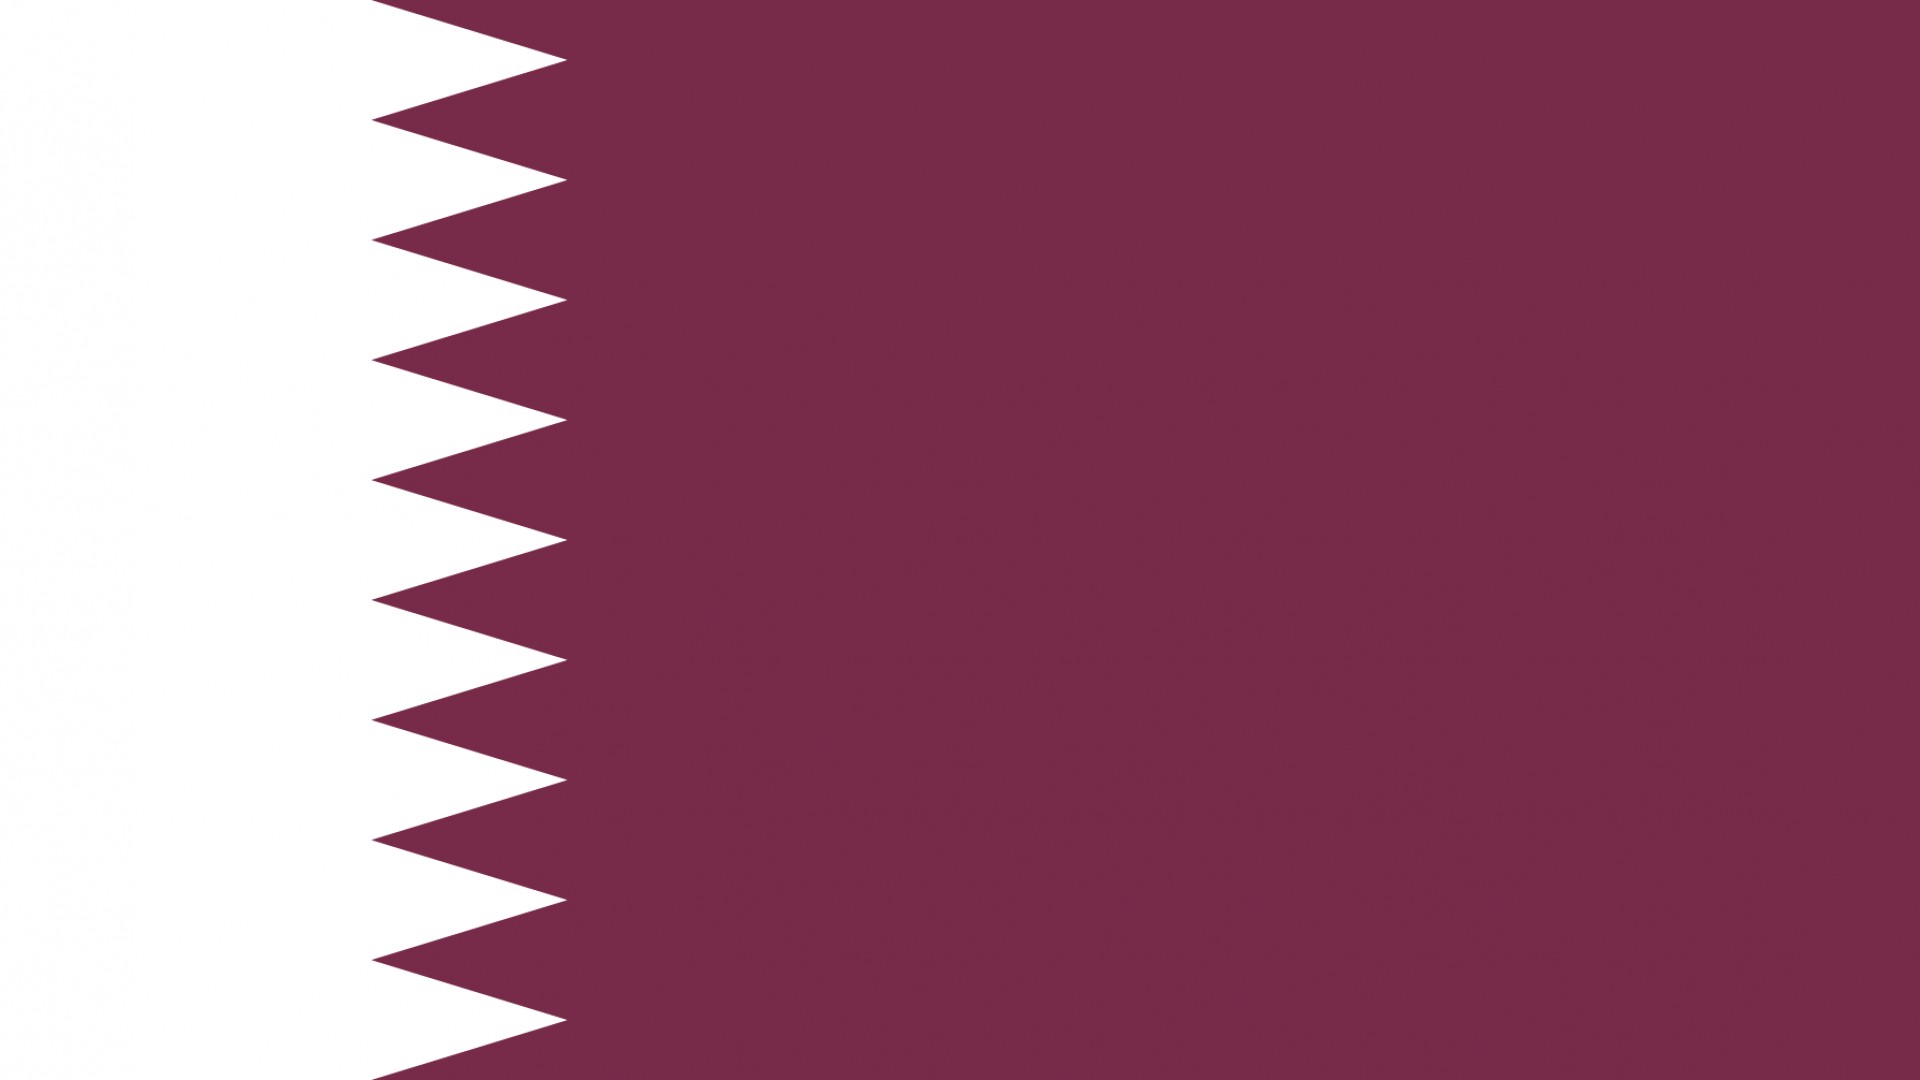 Qatar Flag Wallpaper High Definition Quality Widescreen